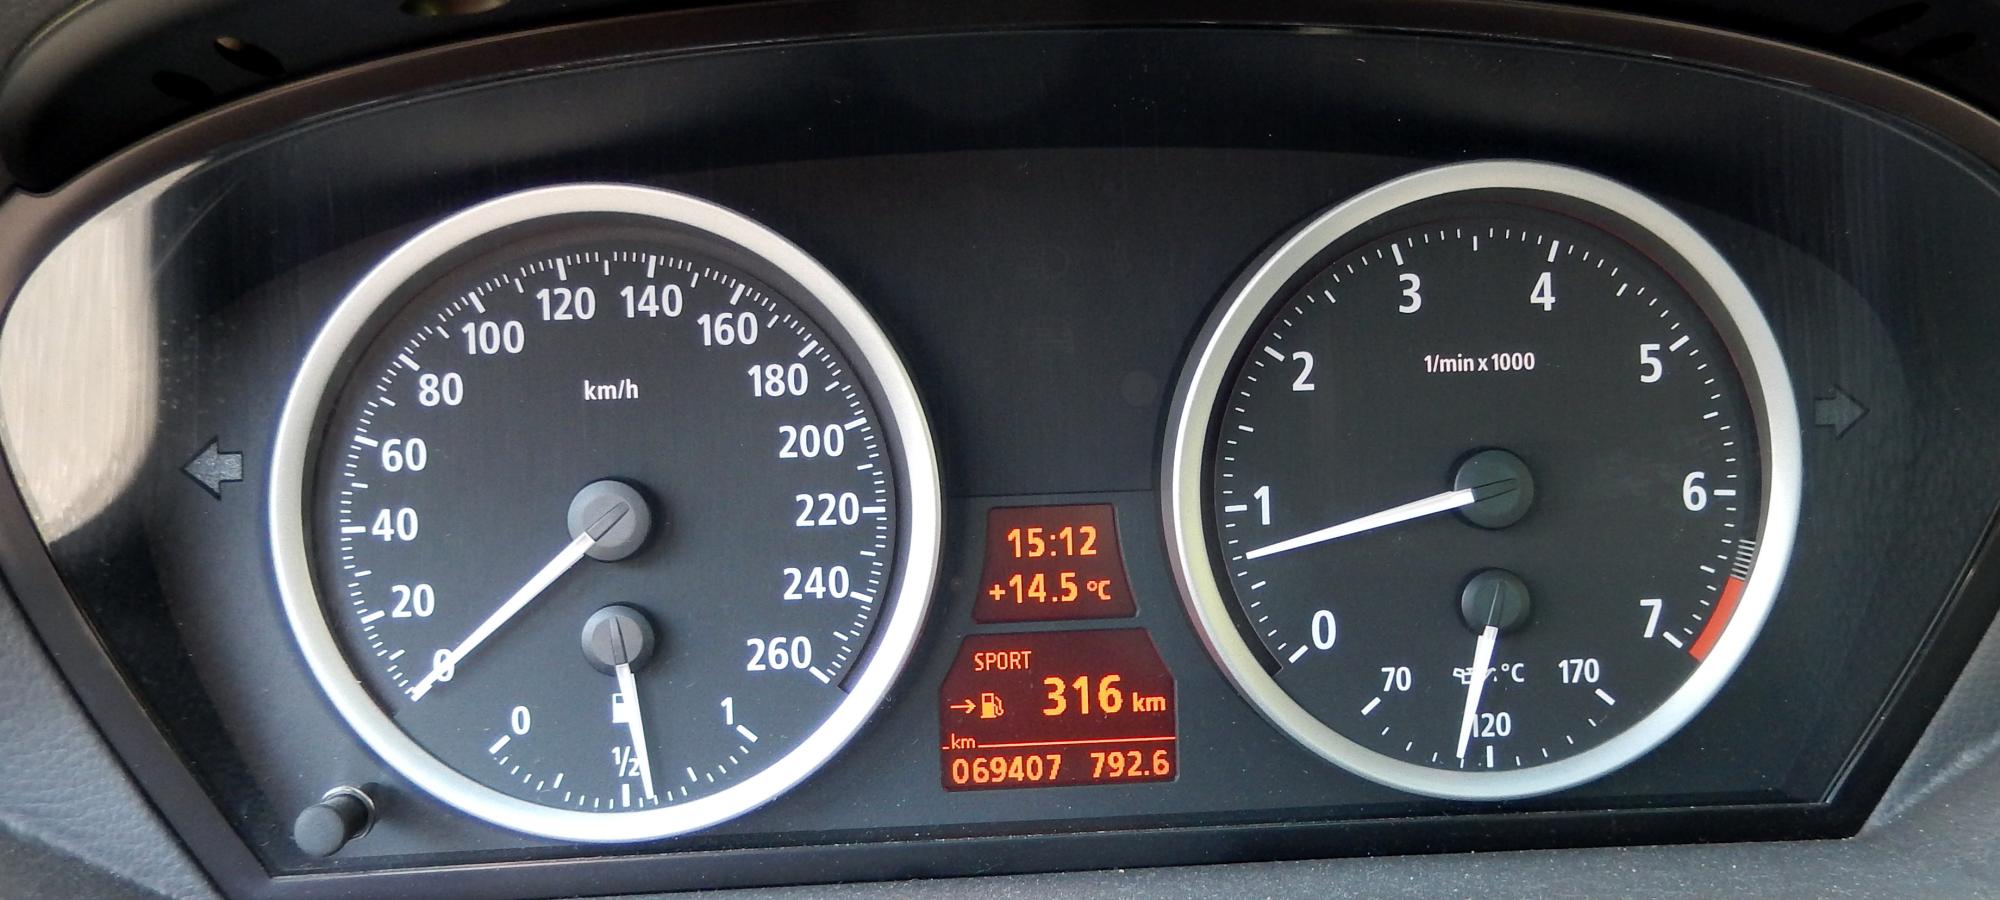 Vehicles - BMW645ci #Odometer